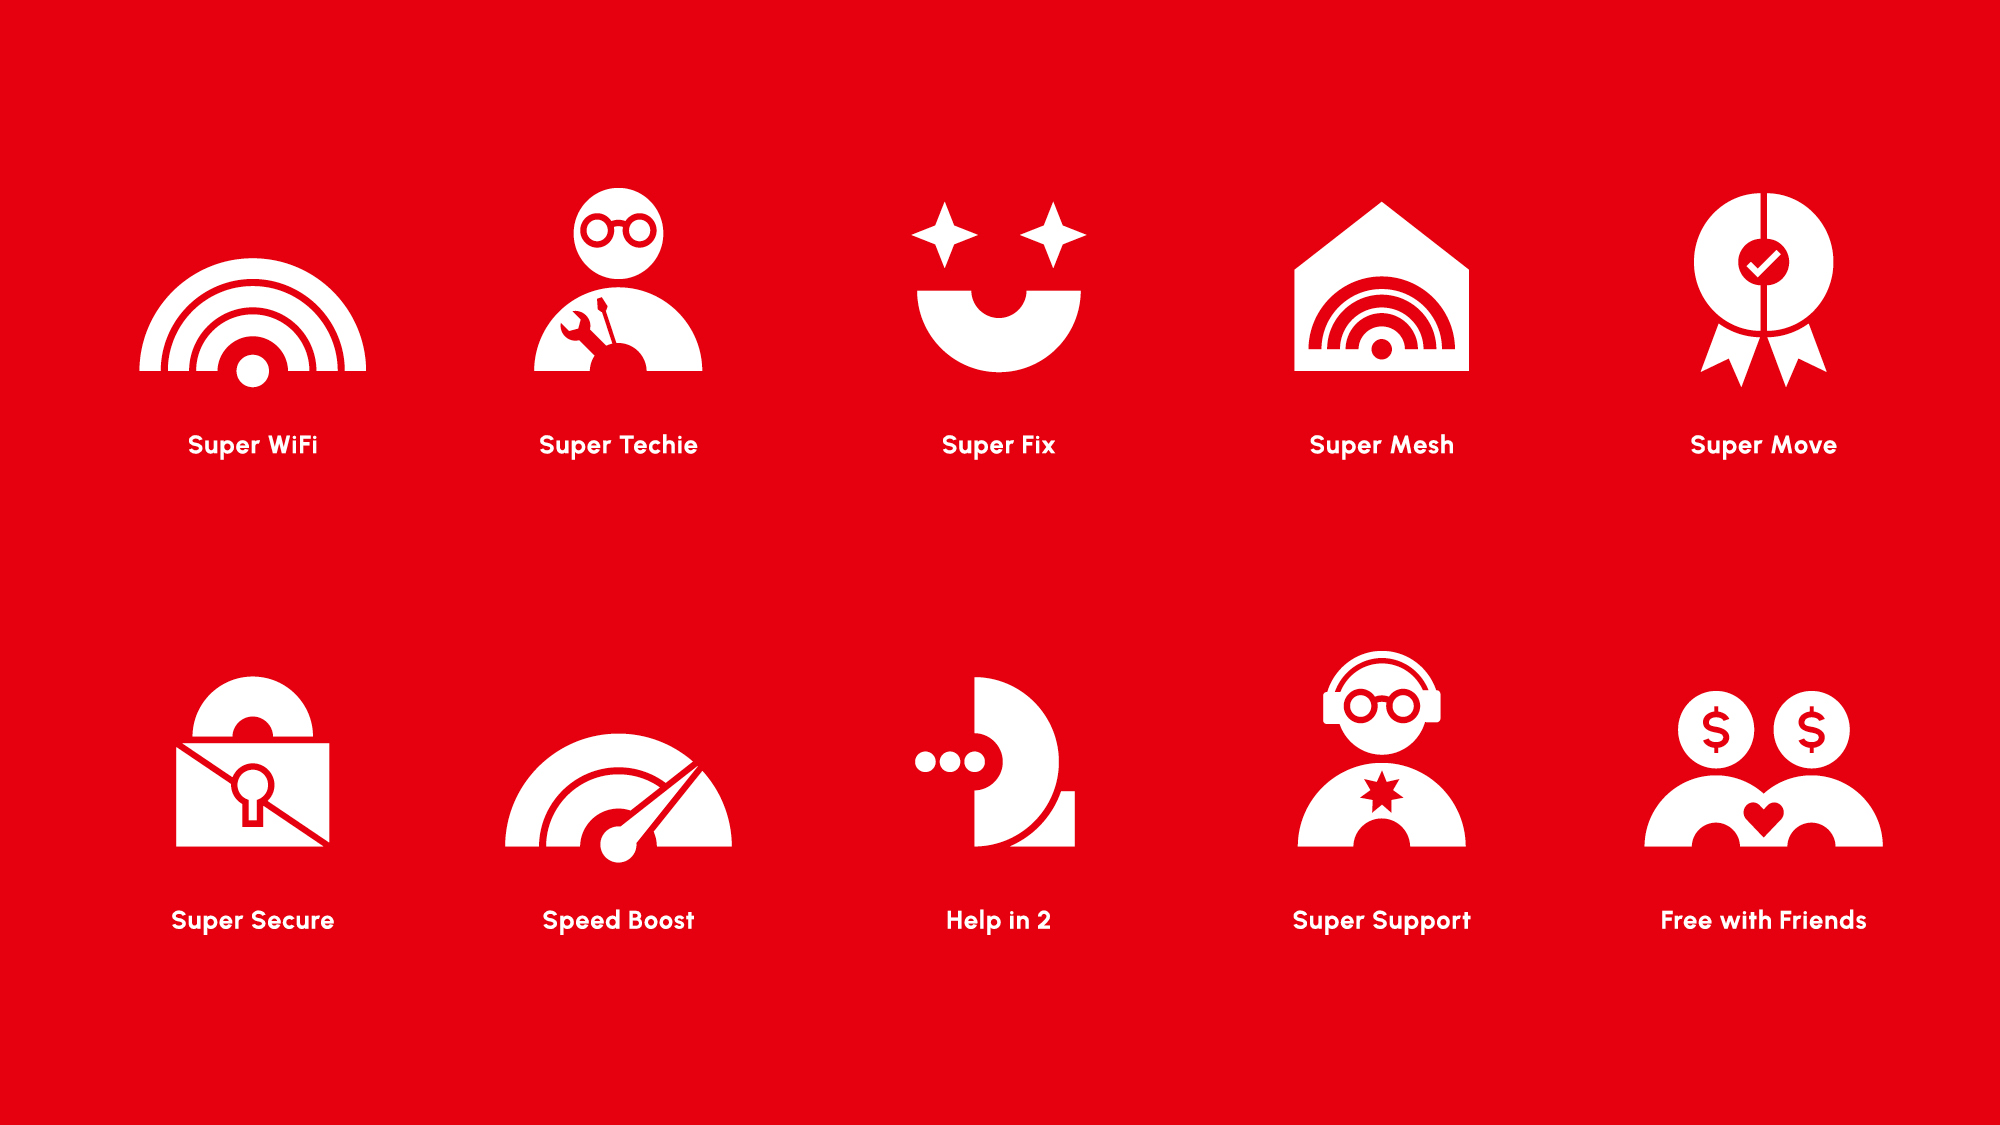 Entity-3-Three-Brand-Design-Agency-Sydney-Superloop-9-brand-icons